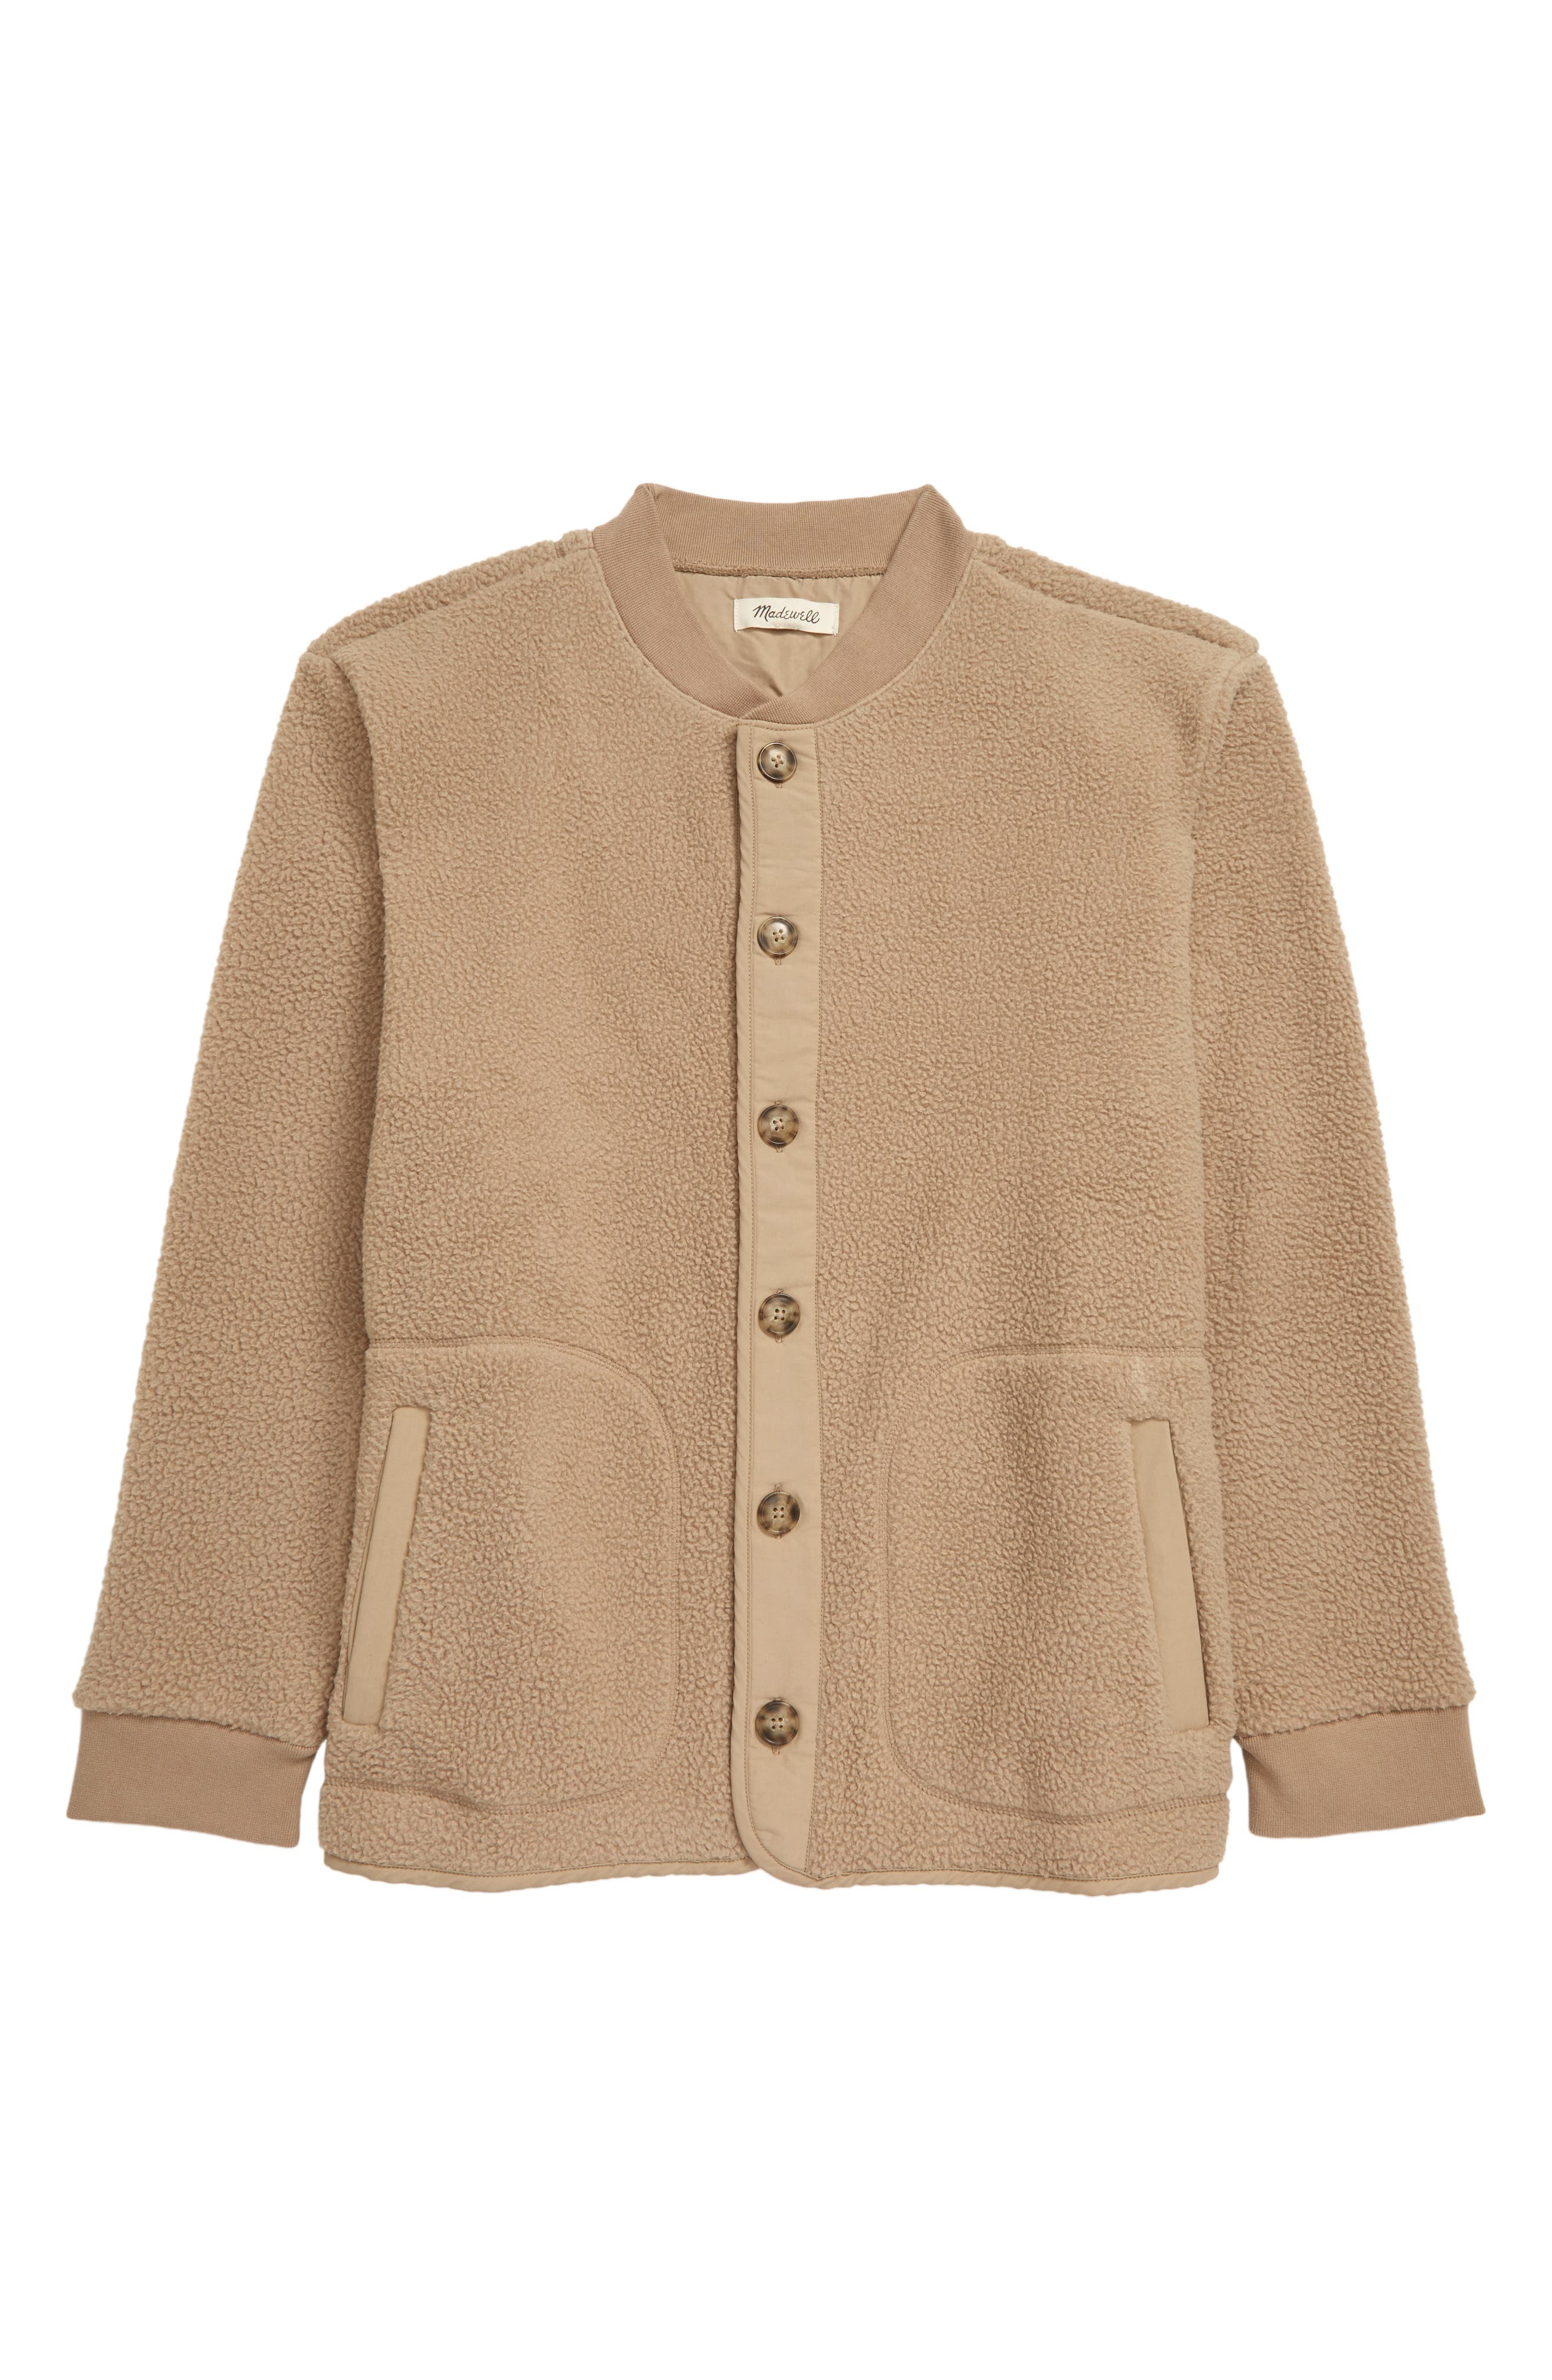 Madewell Sourced High Pile Fleece Shirt Jacket, $73 | Nordstrom | Lookastic